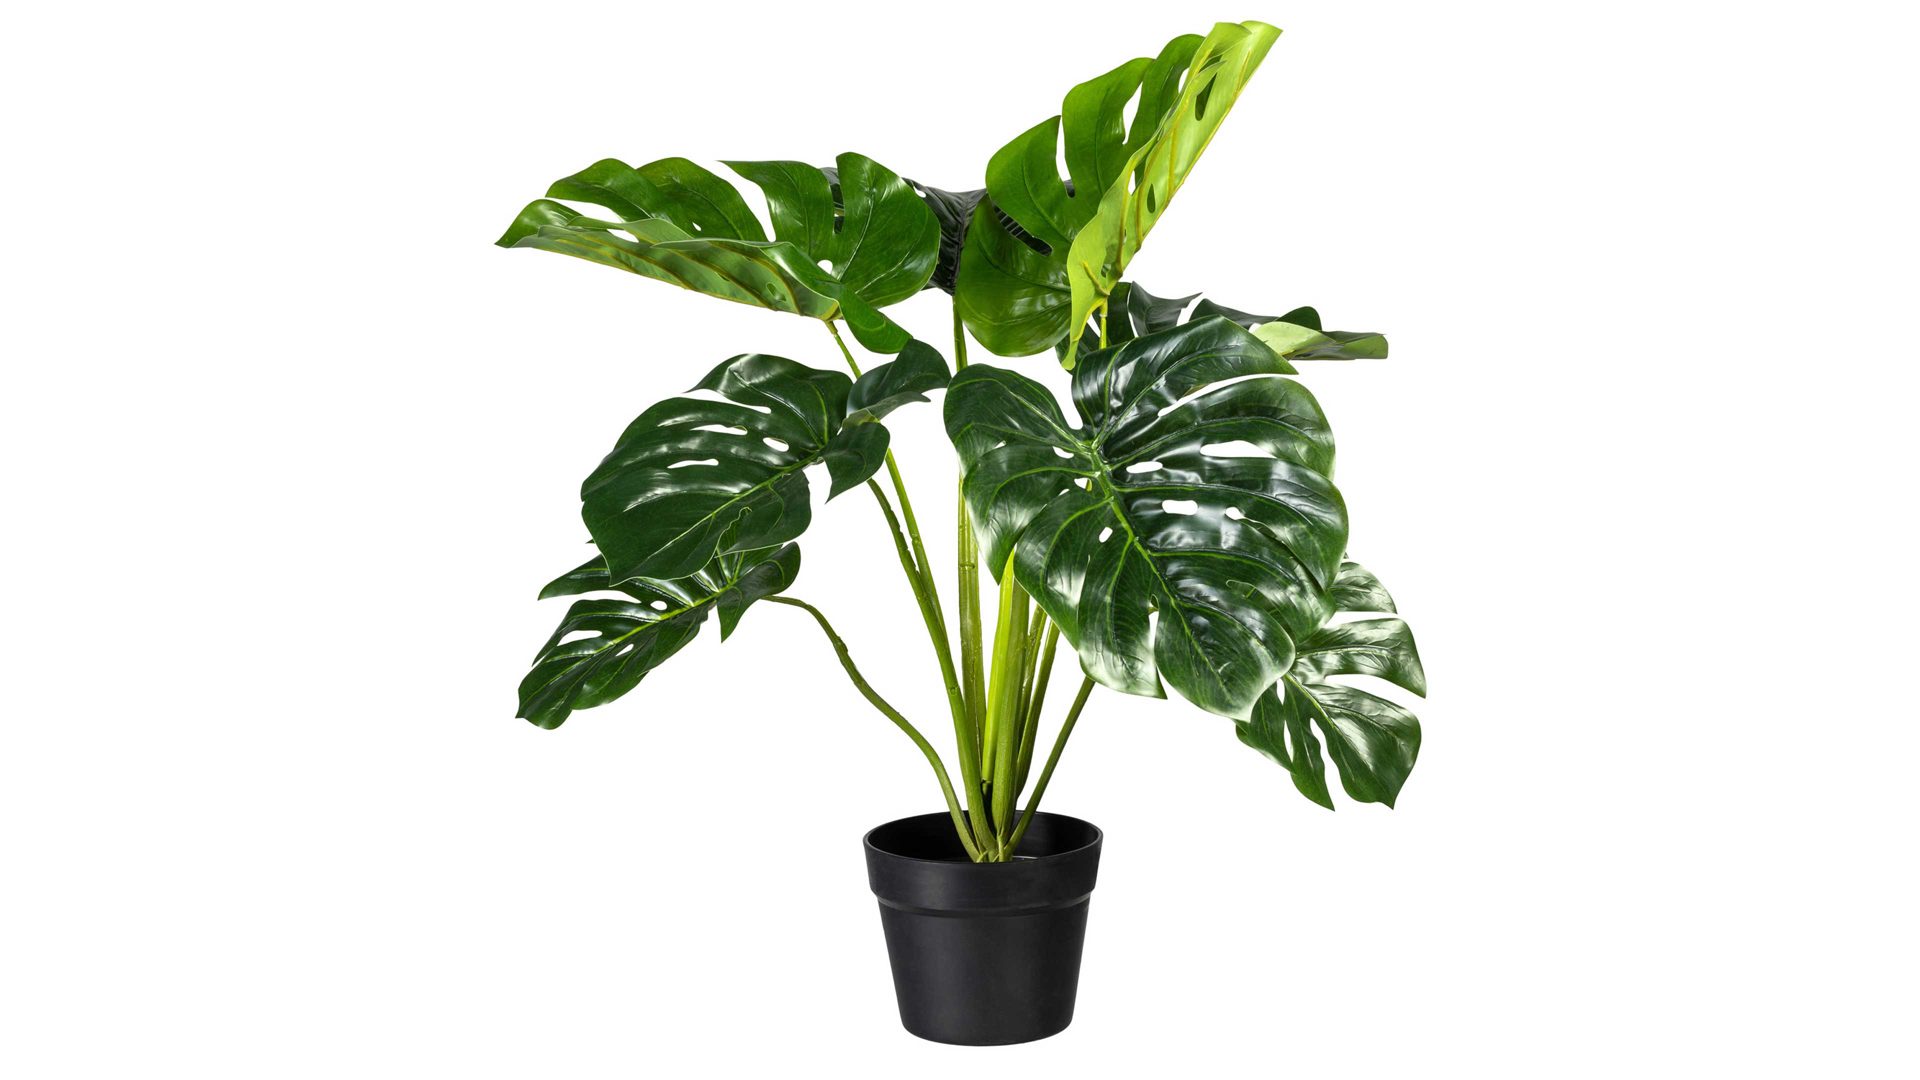 Pflanze Gasper aus Kunststoff in Grün Splitphilodendron grüner Kunststoff & schwarzer Topf – Höhe ca. 65 cm